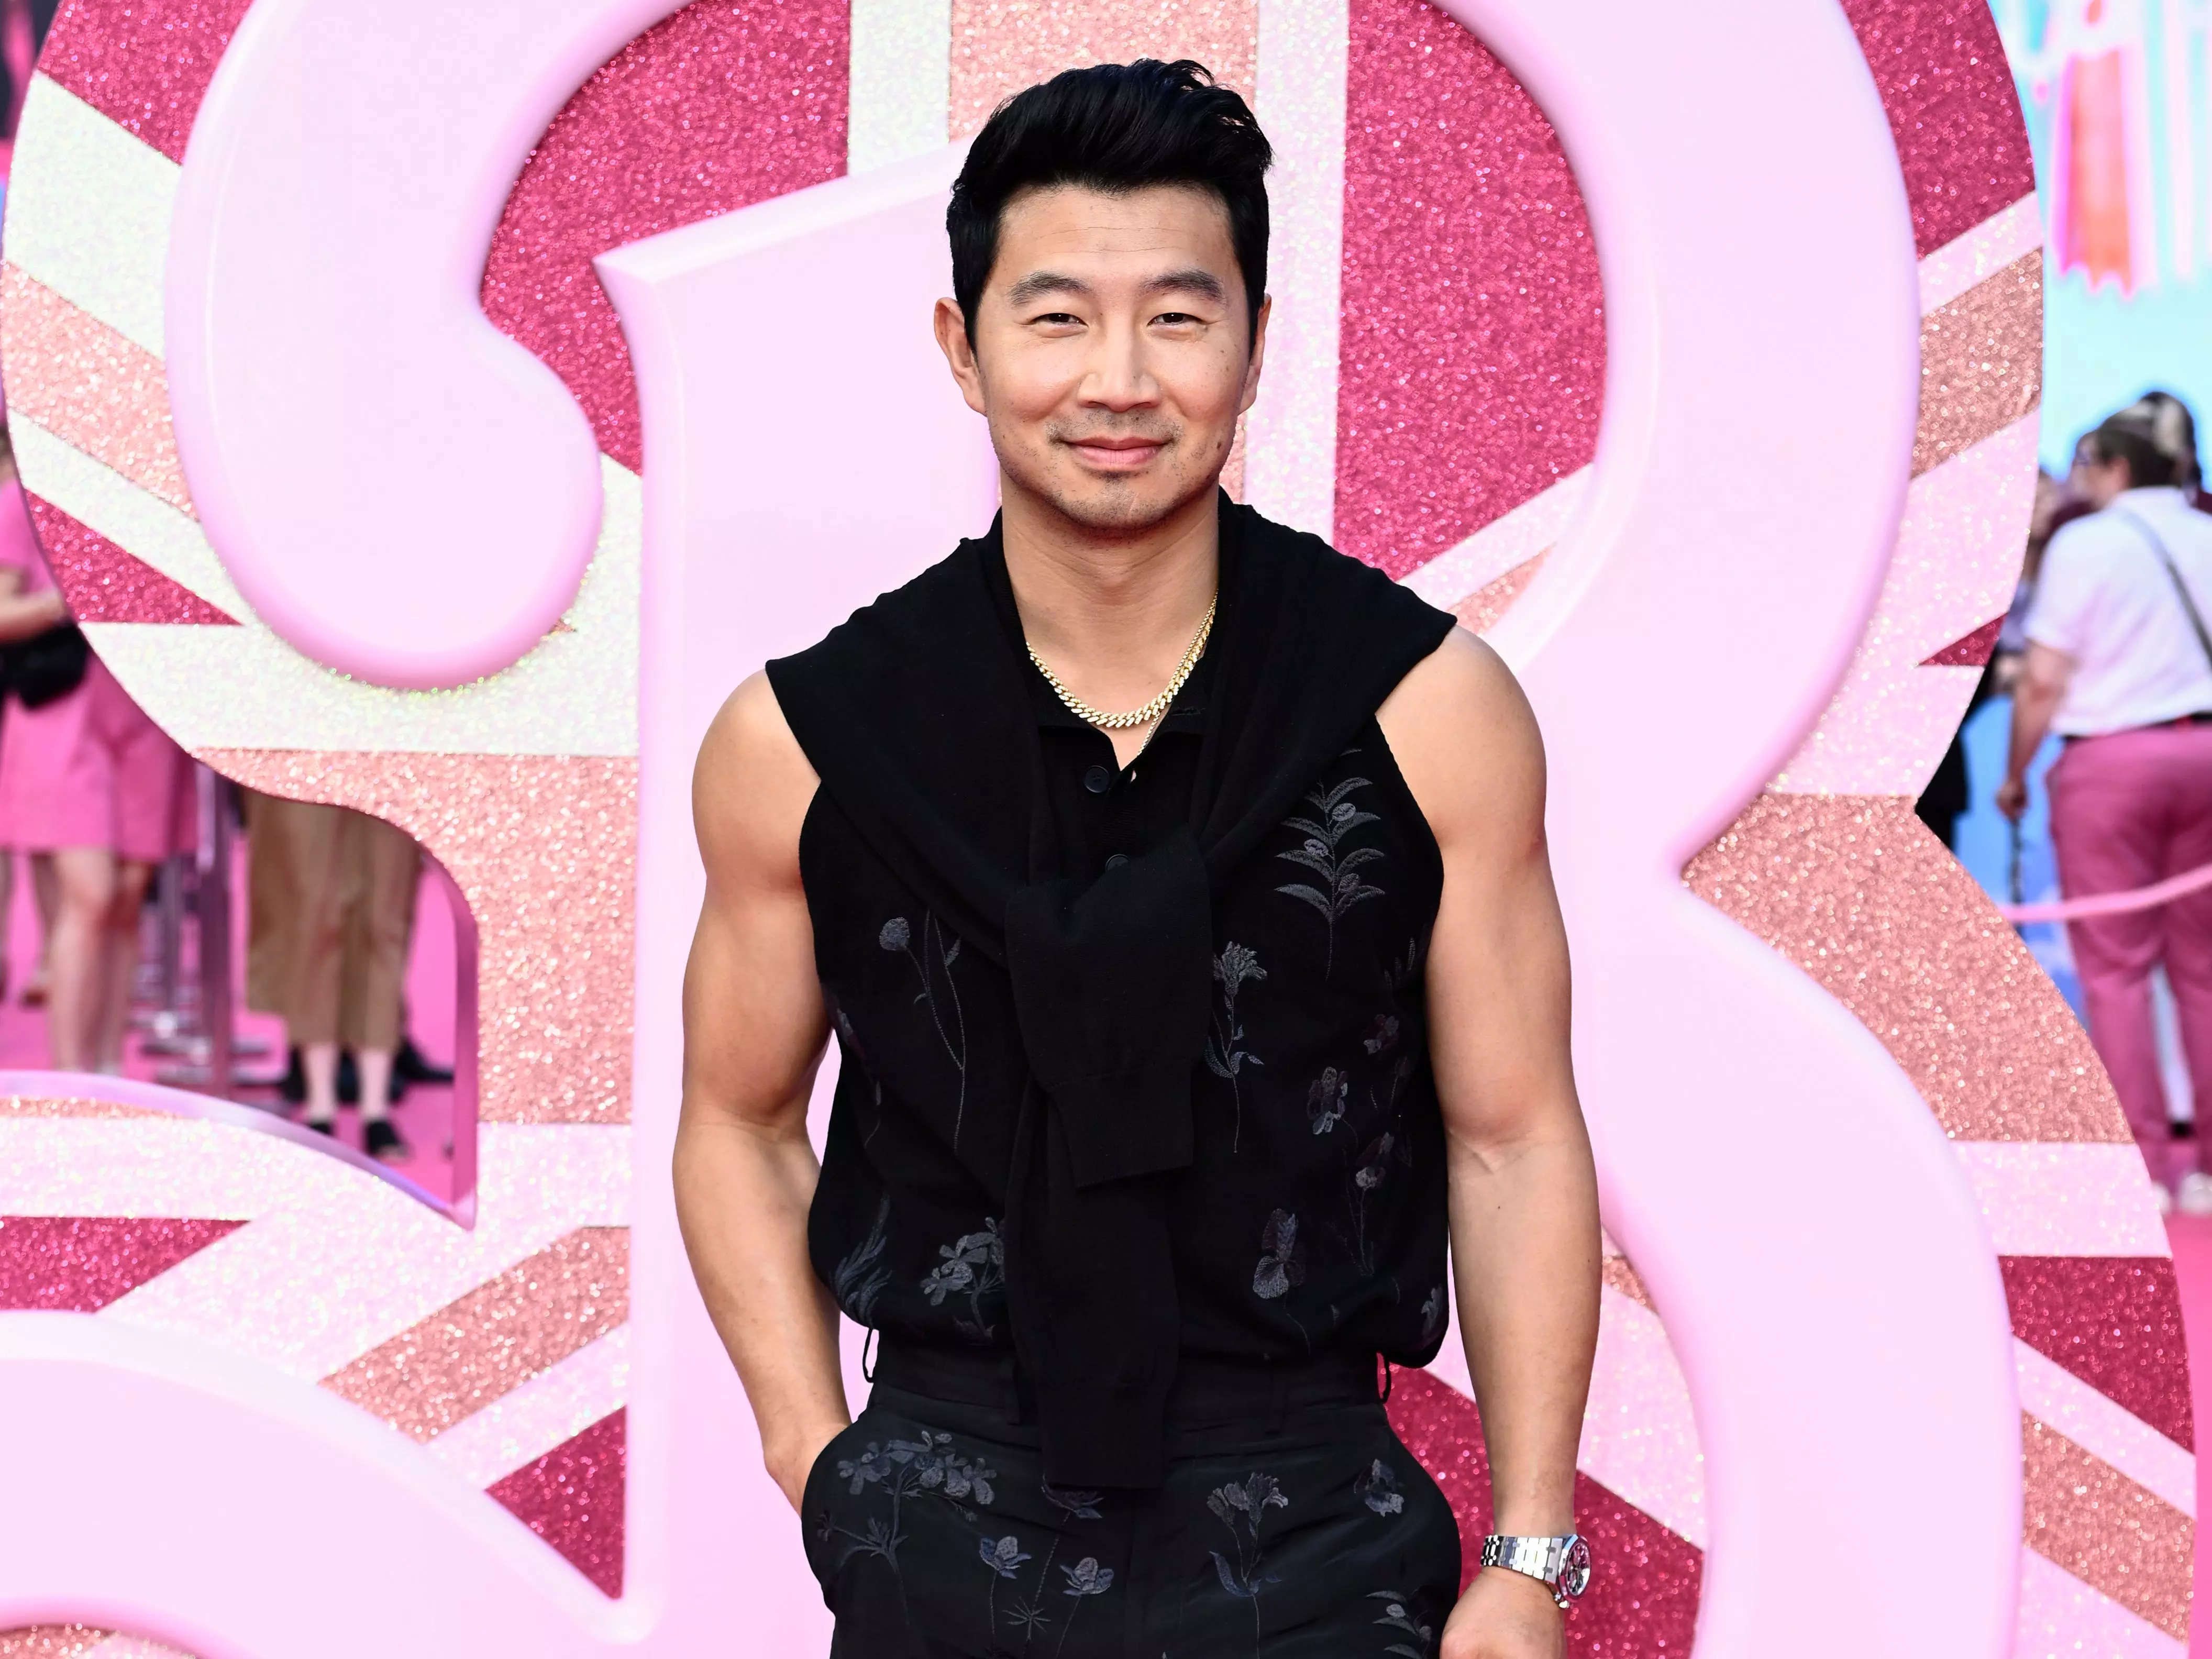 Barbie' star Simu Liu slams claim that he's a 'token' Asian 'thirst trap